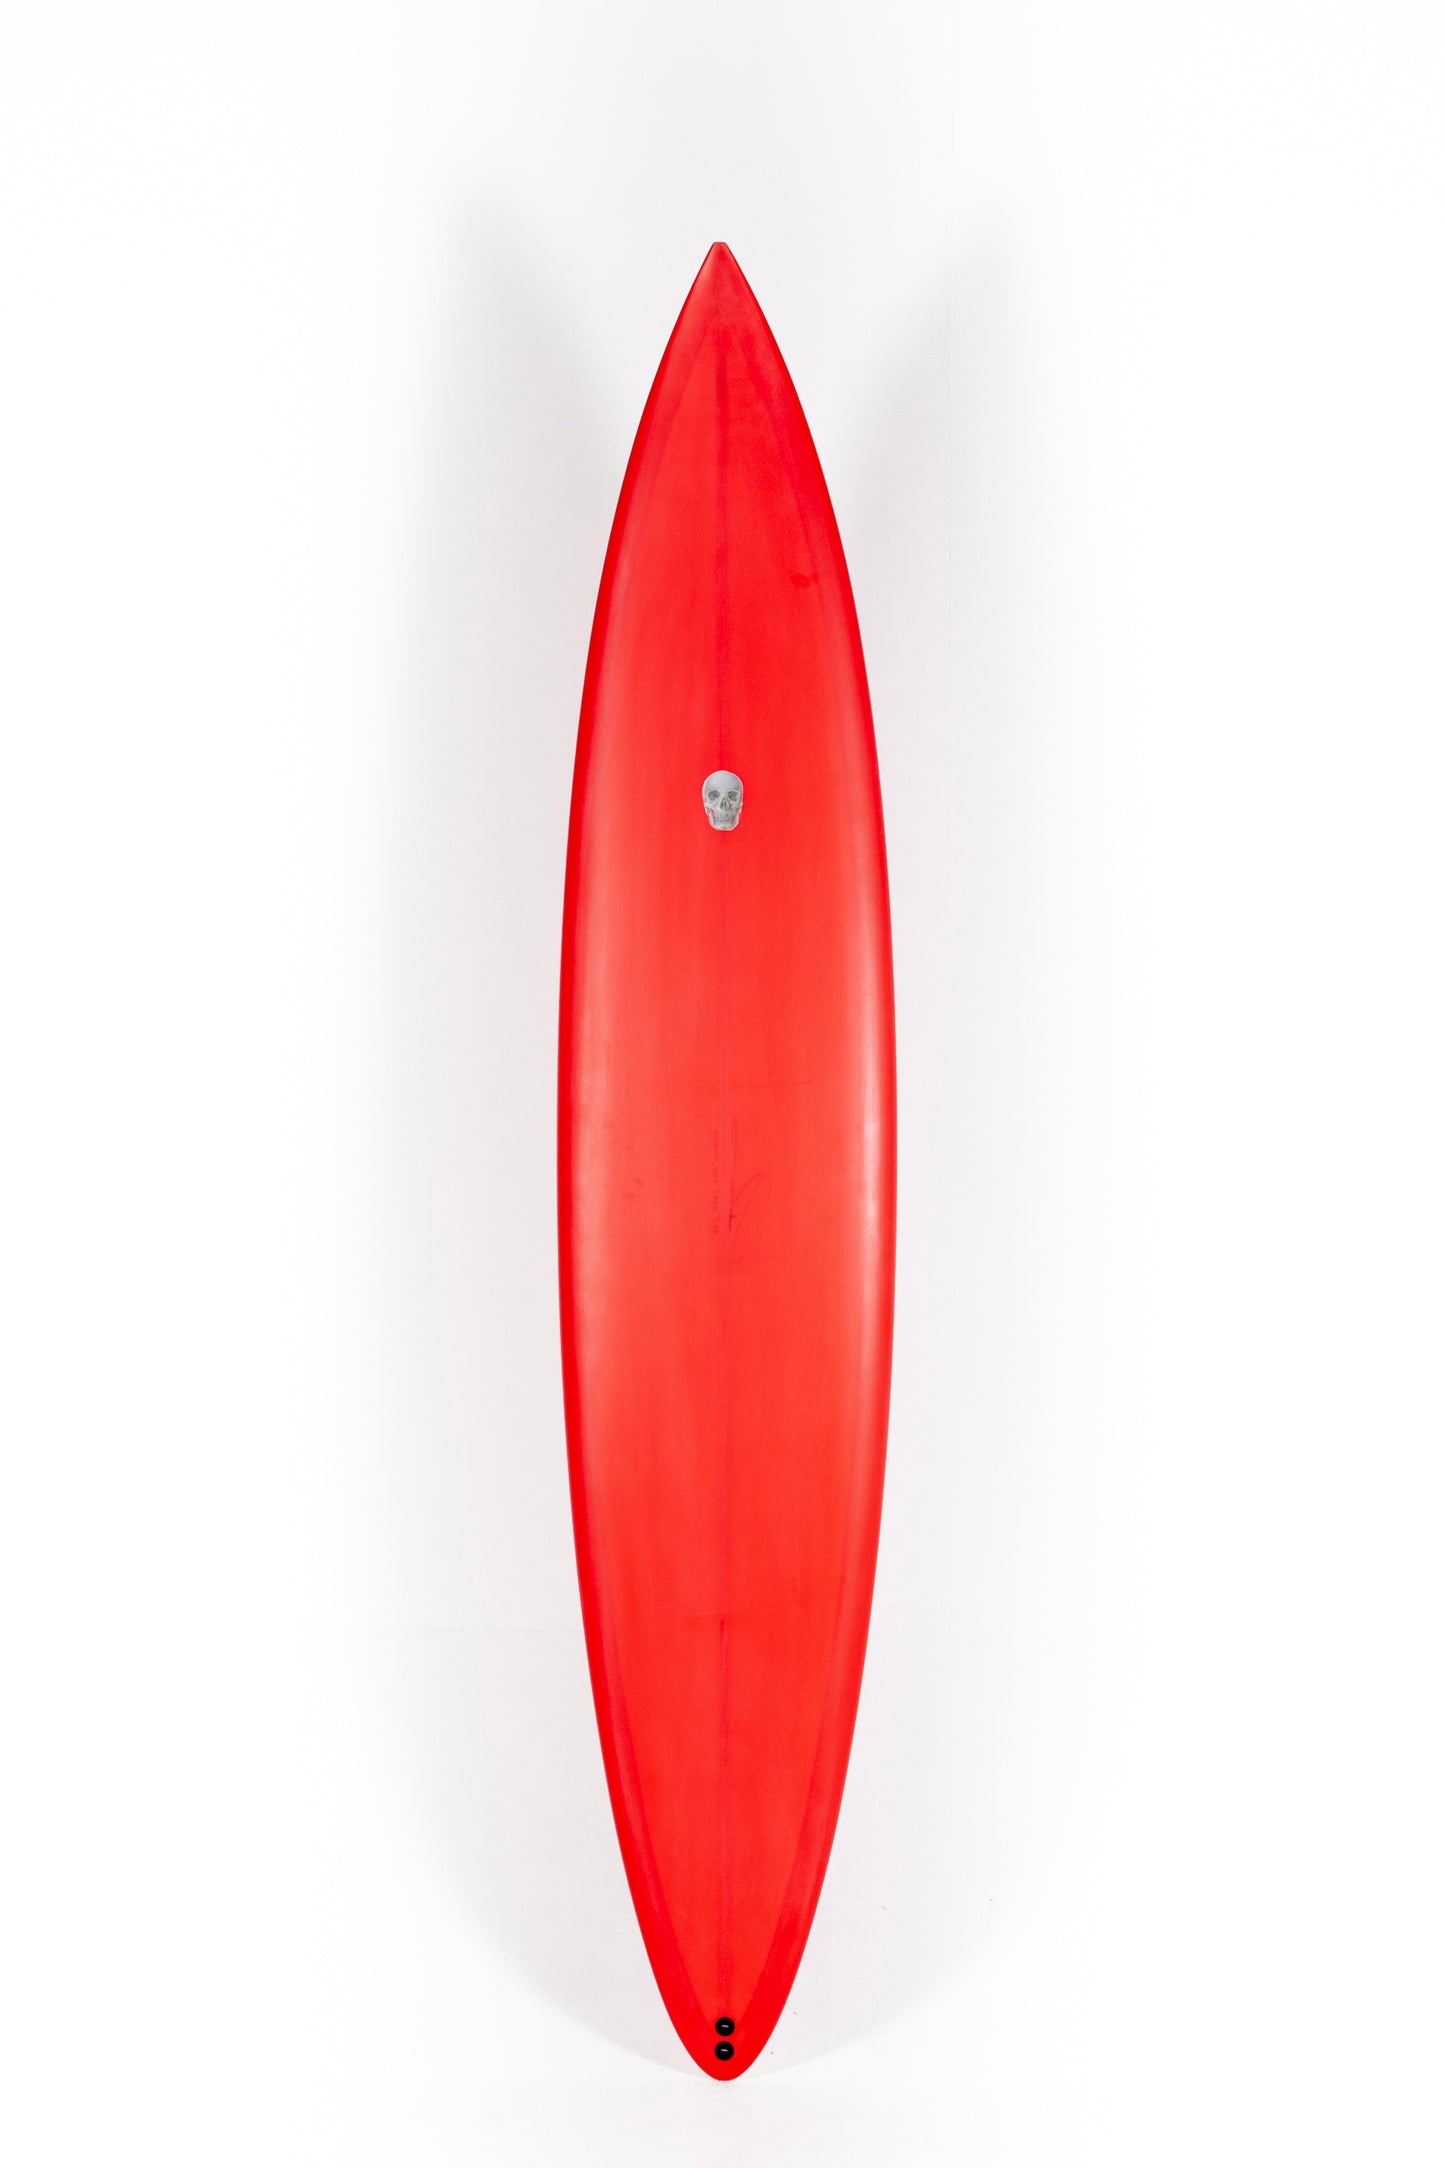 Pukas Surf Shop - Christenson Surfboards - CARRERA - 8'6" x 19 3/8 x 2 3/4 - CX03423